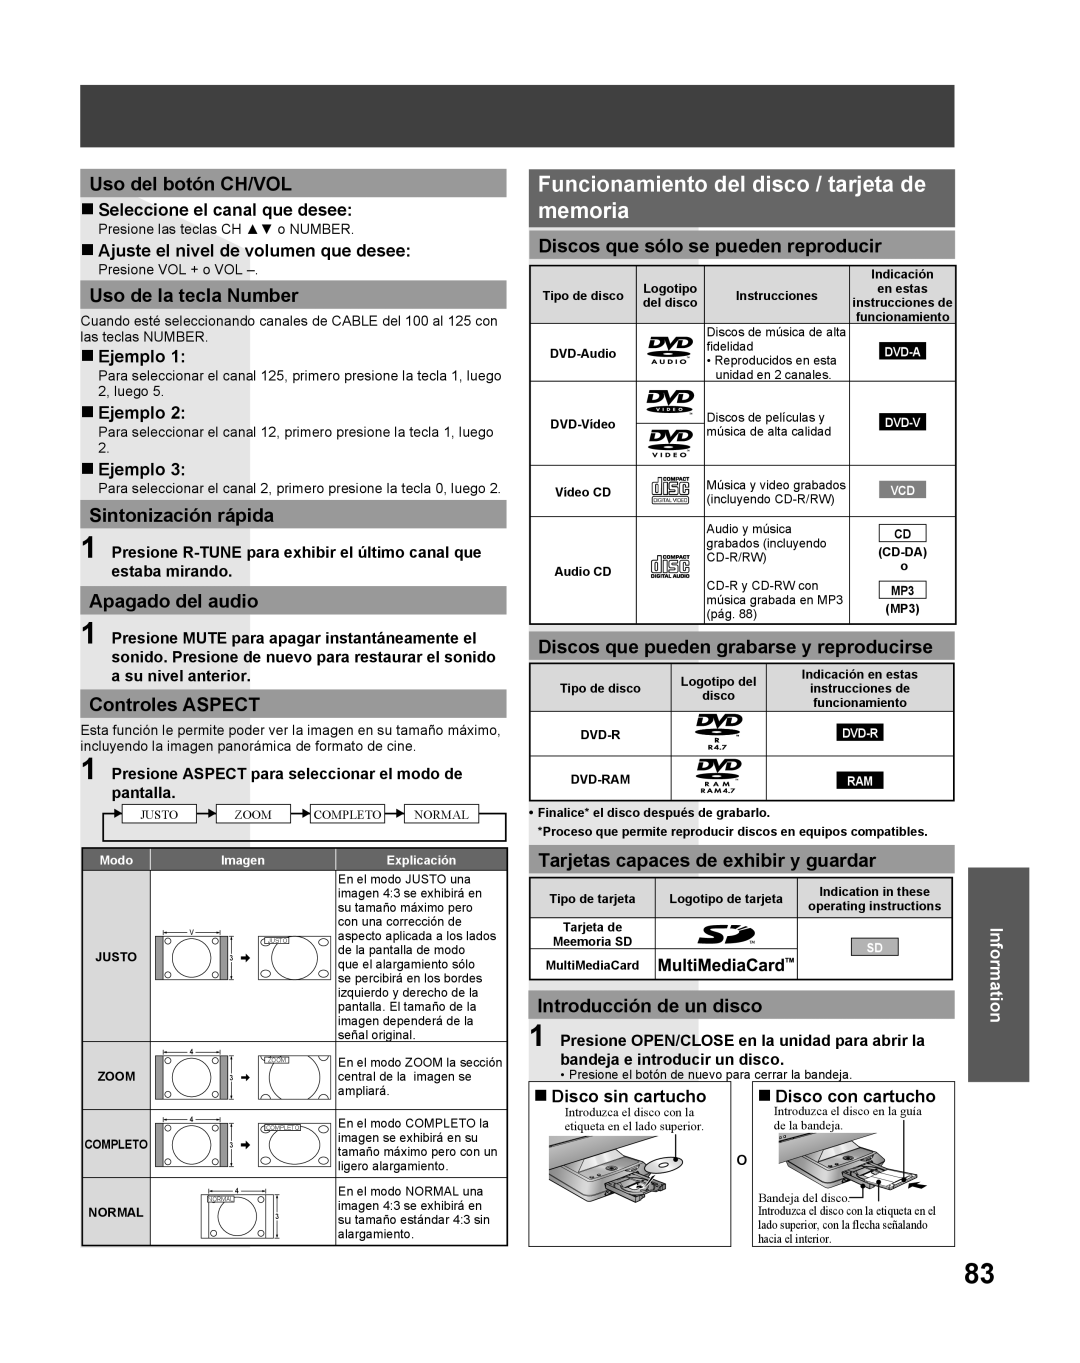 Panasonic TC 22LR30 Funcionamiento del disco / tarjeta de memoria, Uso del botón CH/VOL, Uso de la tecla Number, Ejemplo 